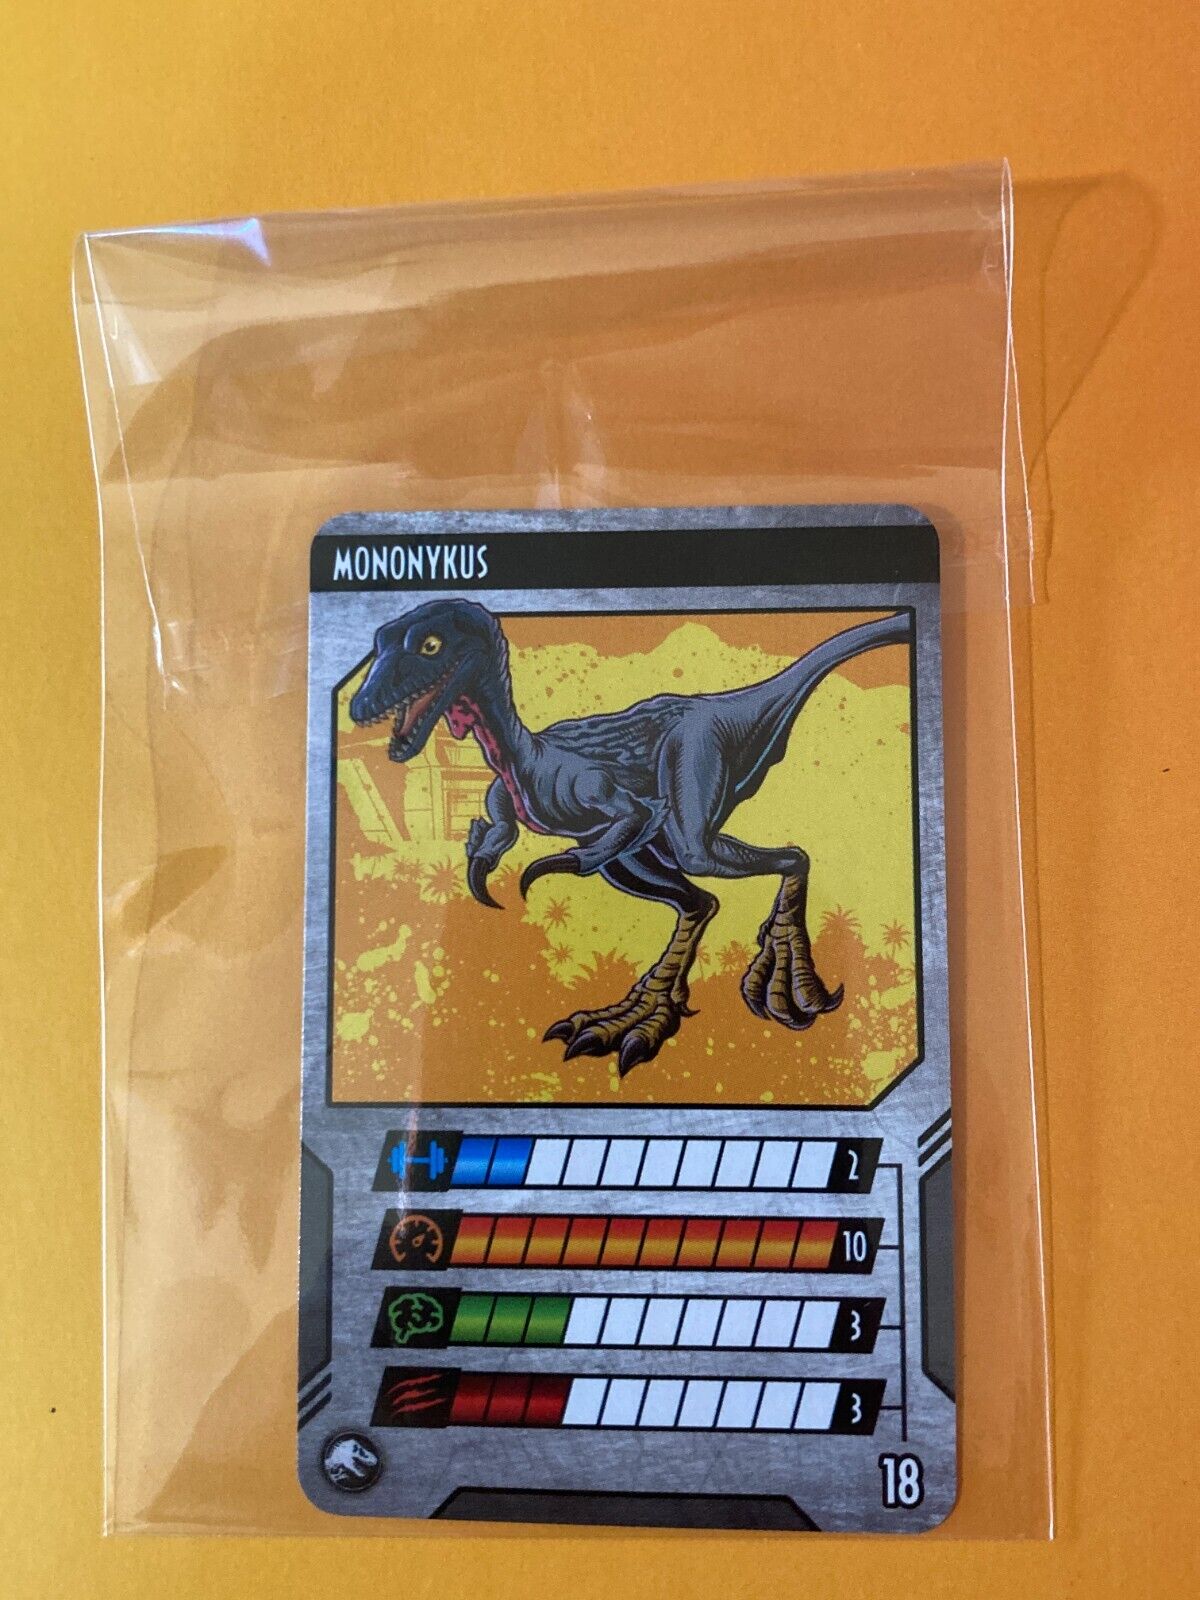 2017 Mattel Jurassic World Trading Card Monoykus #18